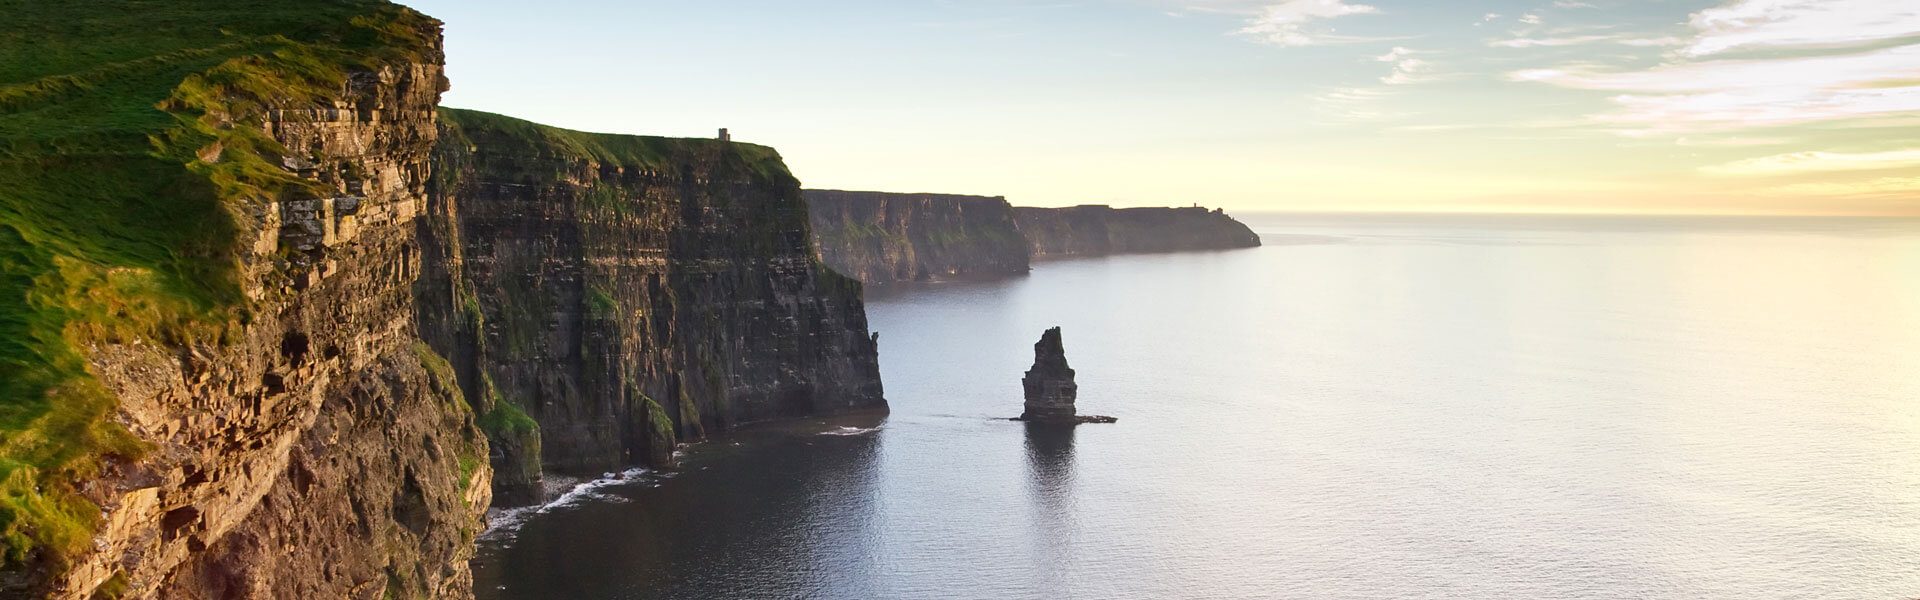 Get a breath of fresh Irish sea air at the Cliffs of Moher